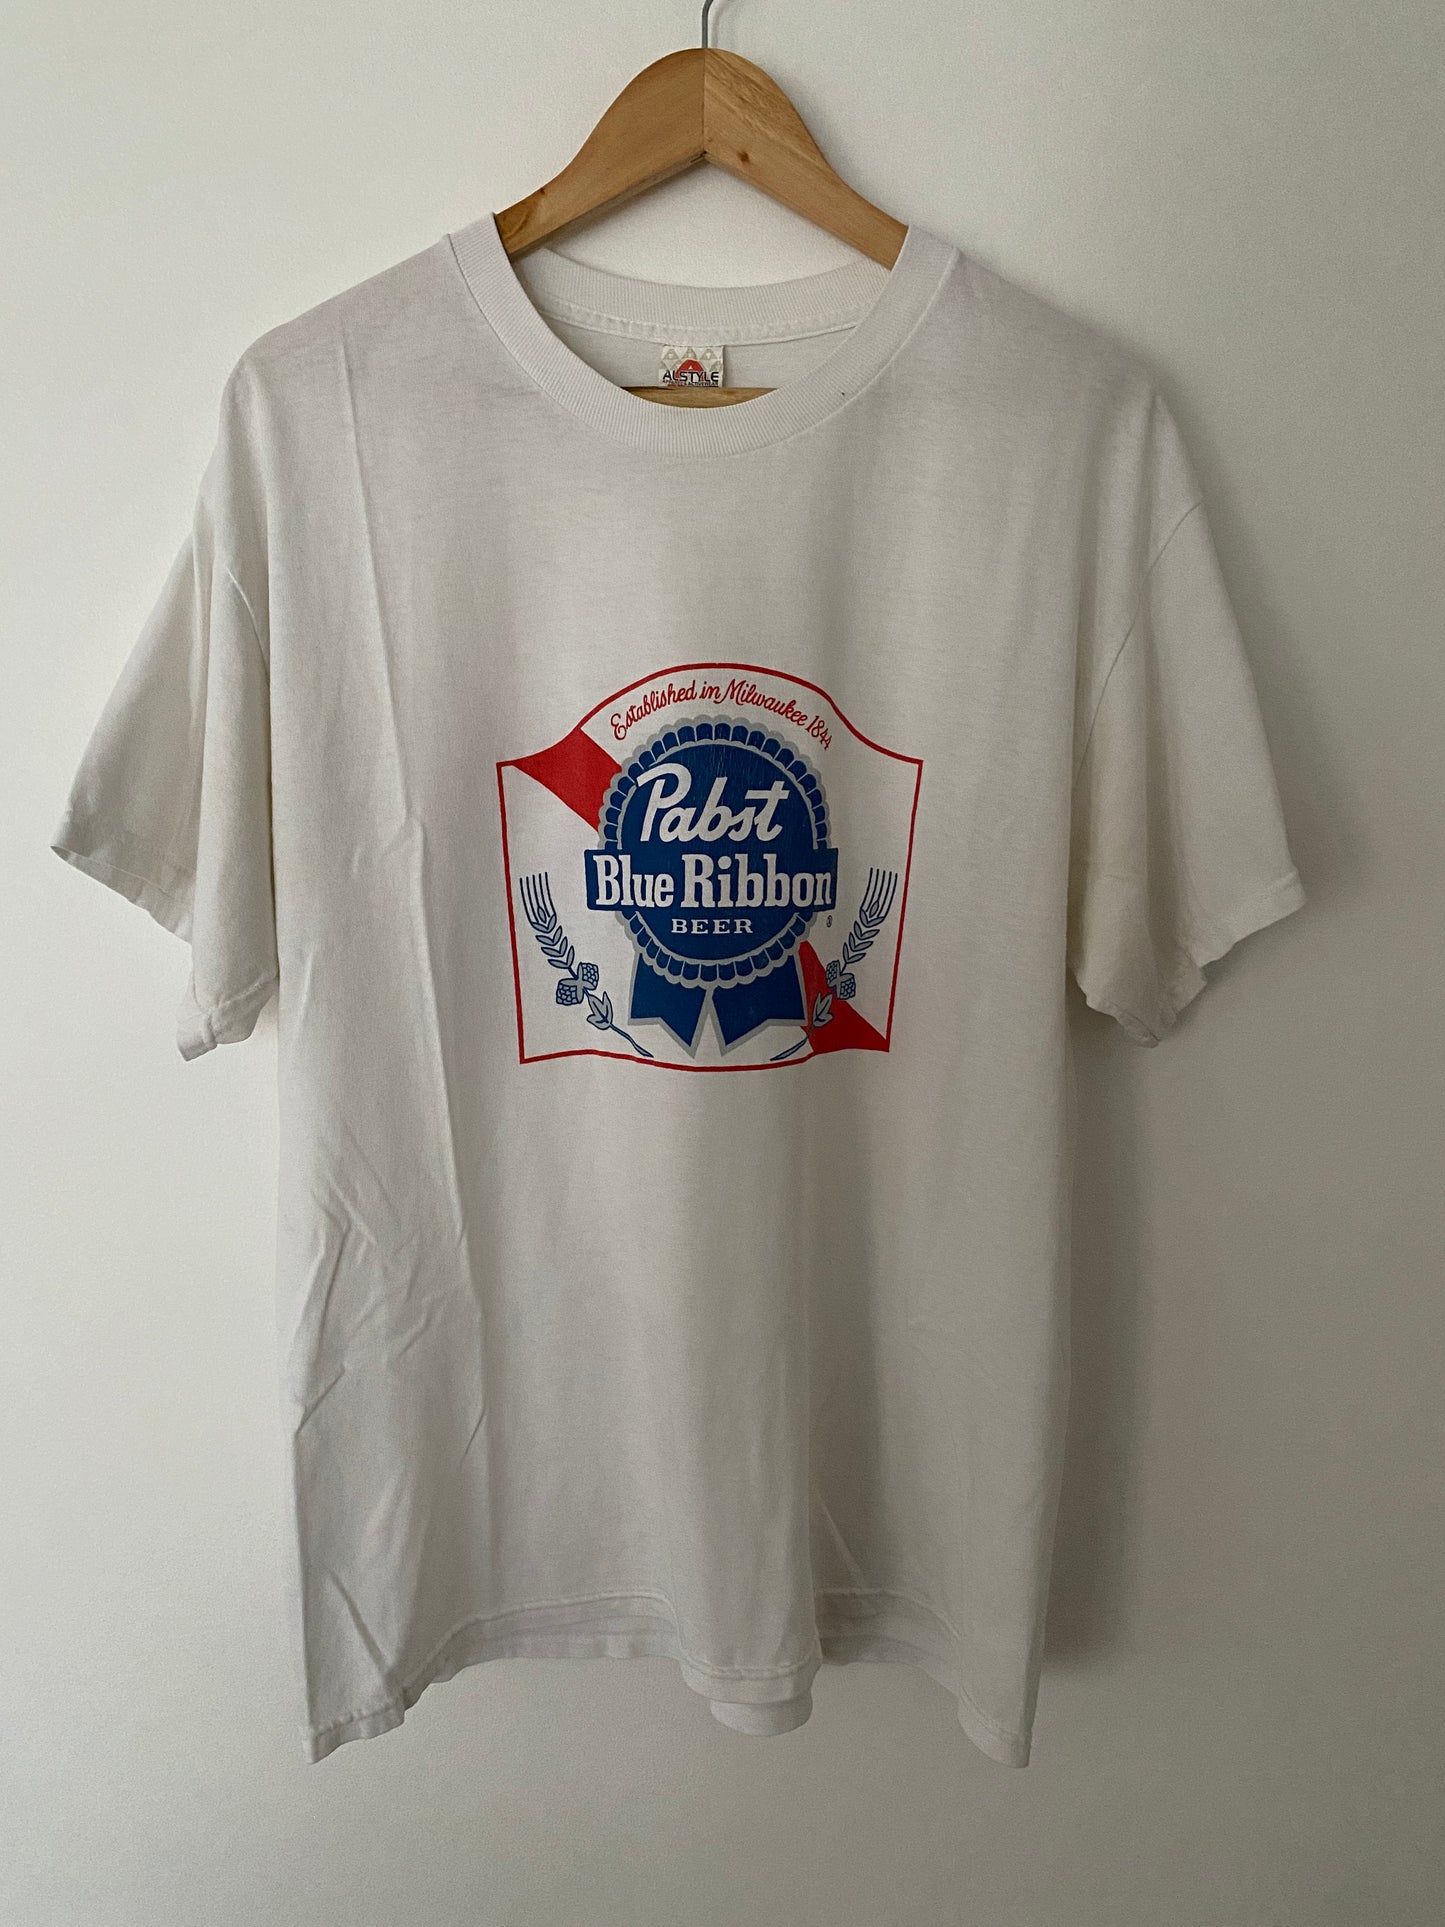 Pabst Blue Ribbon Beer T-Shirt - L